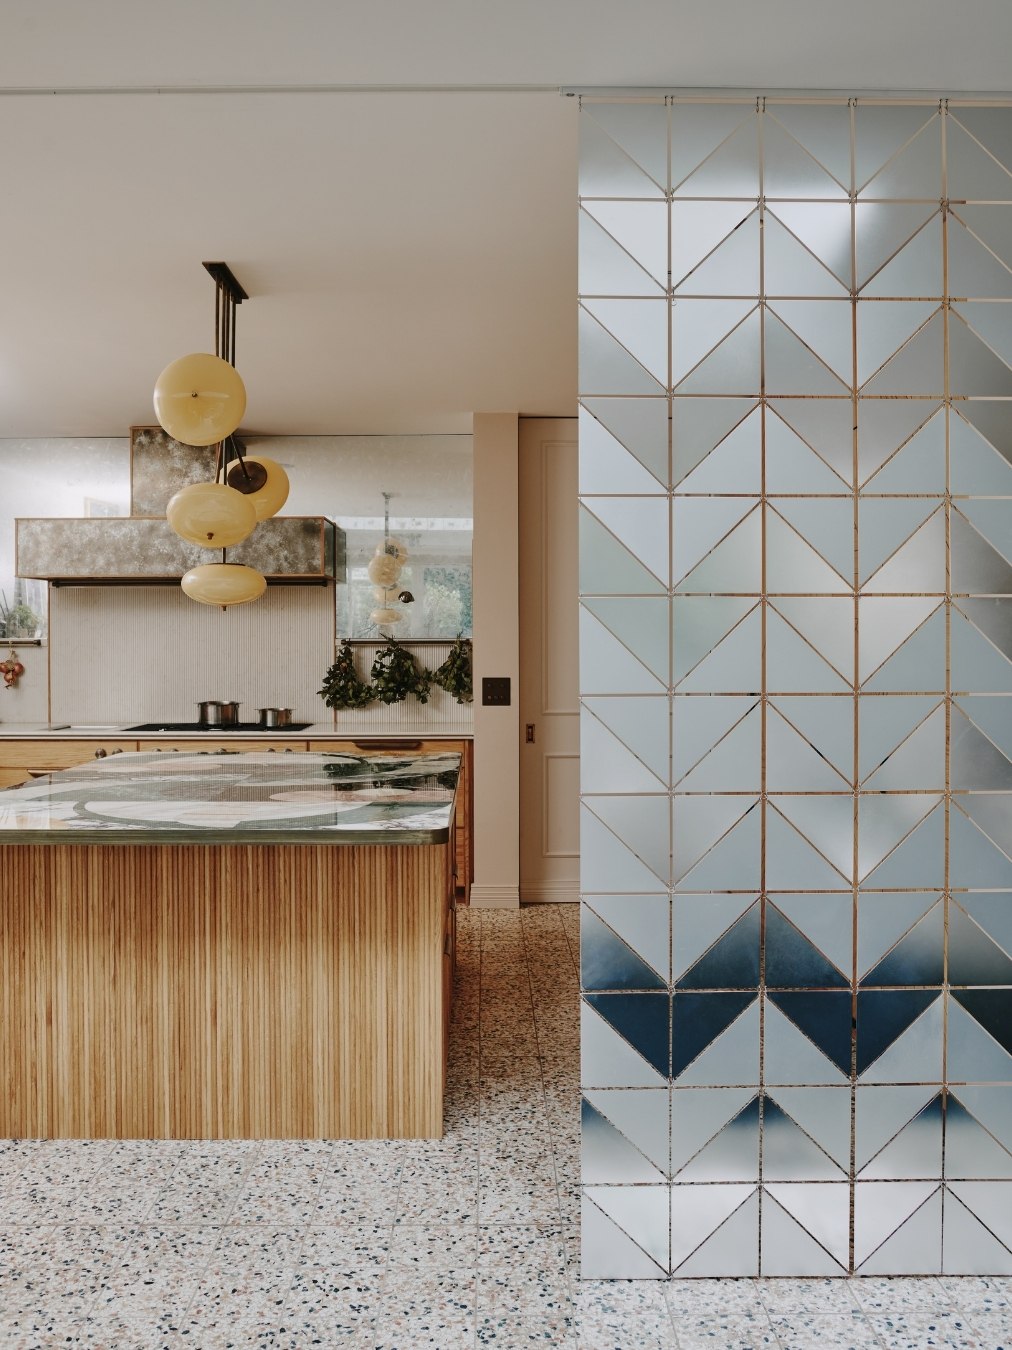 kitchen design, Ledbury Studio’s Kitchen Embraces Oak and Metal Contrast